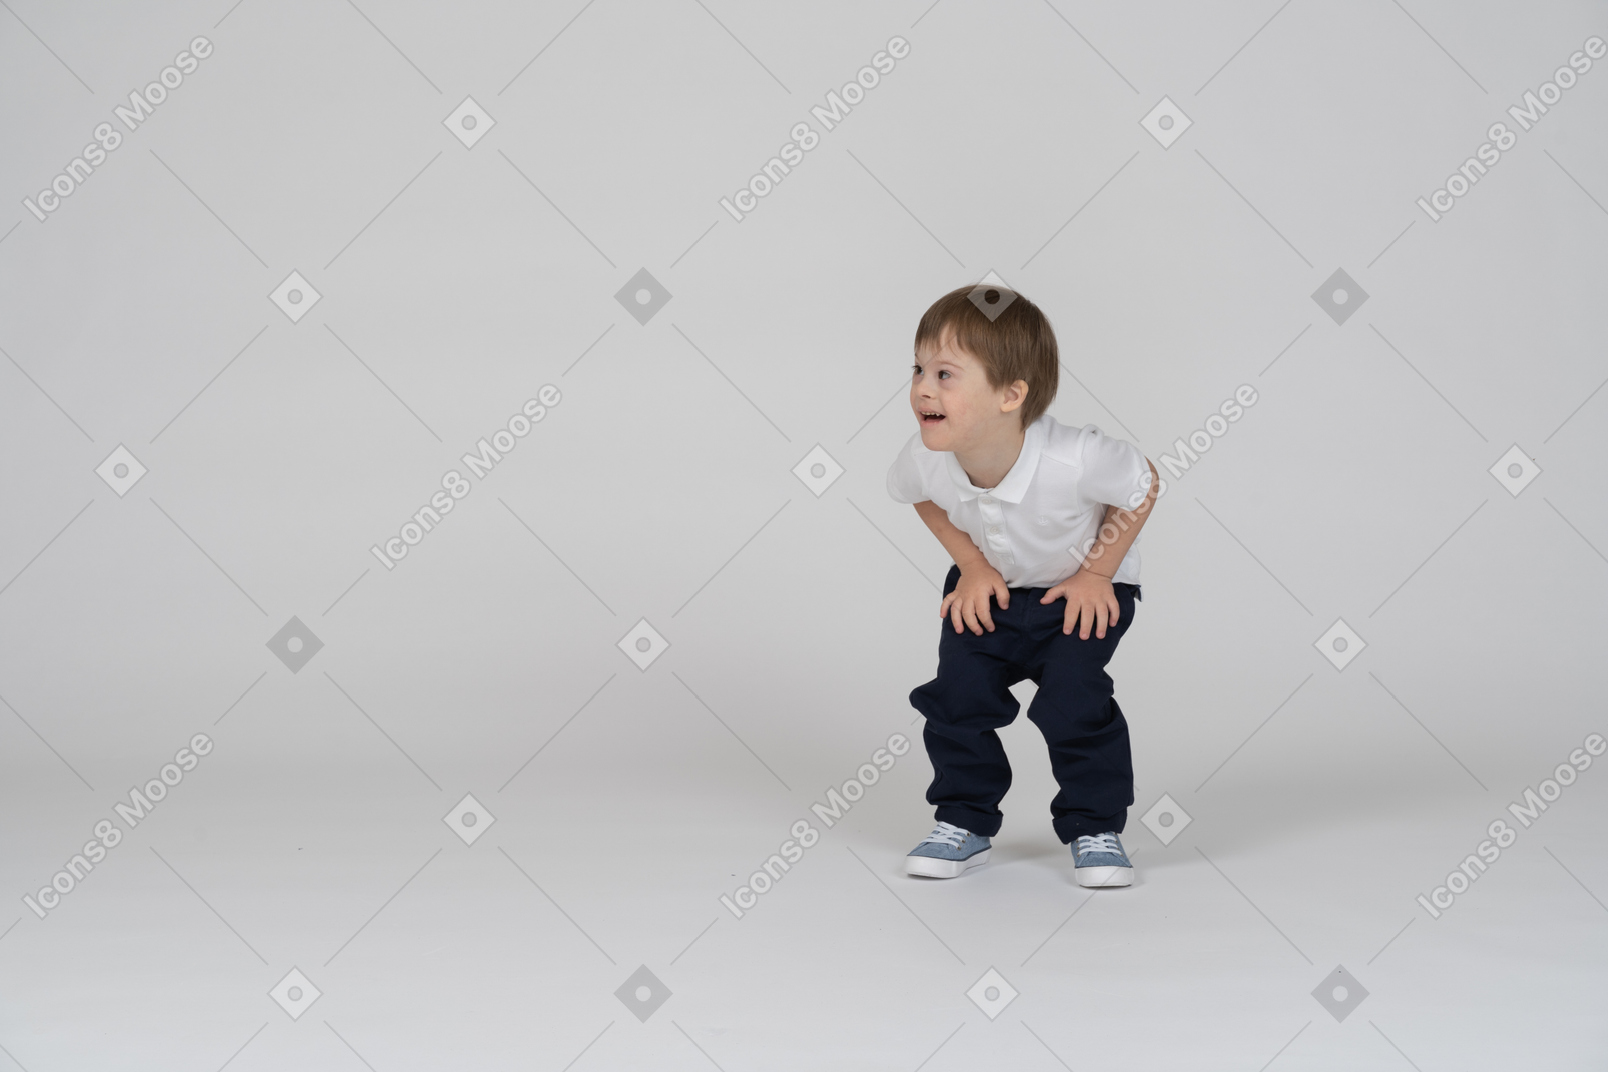 Вид спереди на мальчика, присевшего на корточки и положившего руки на колени